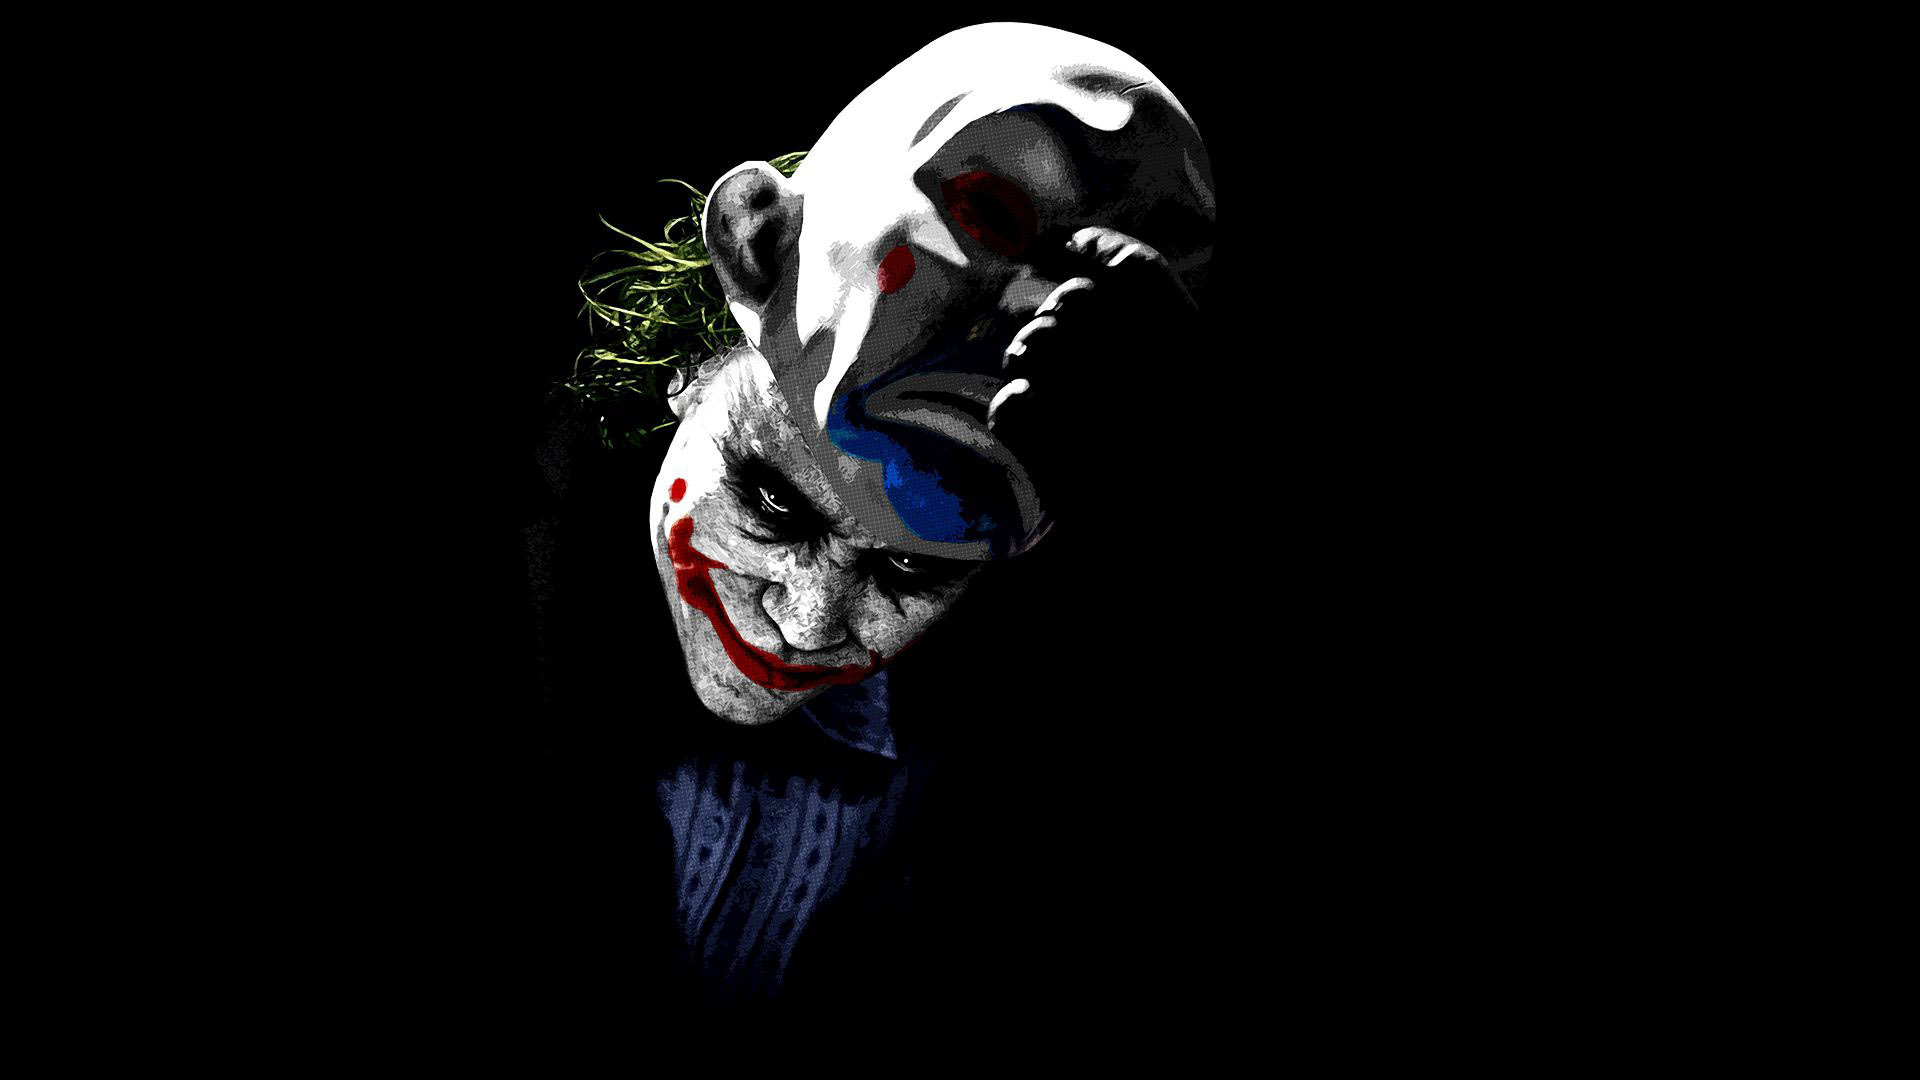 Joker The Dark Knight Wallpaper - Wallpapersafari